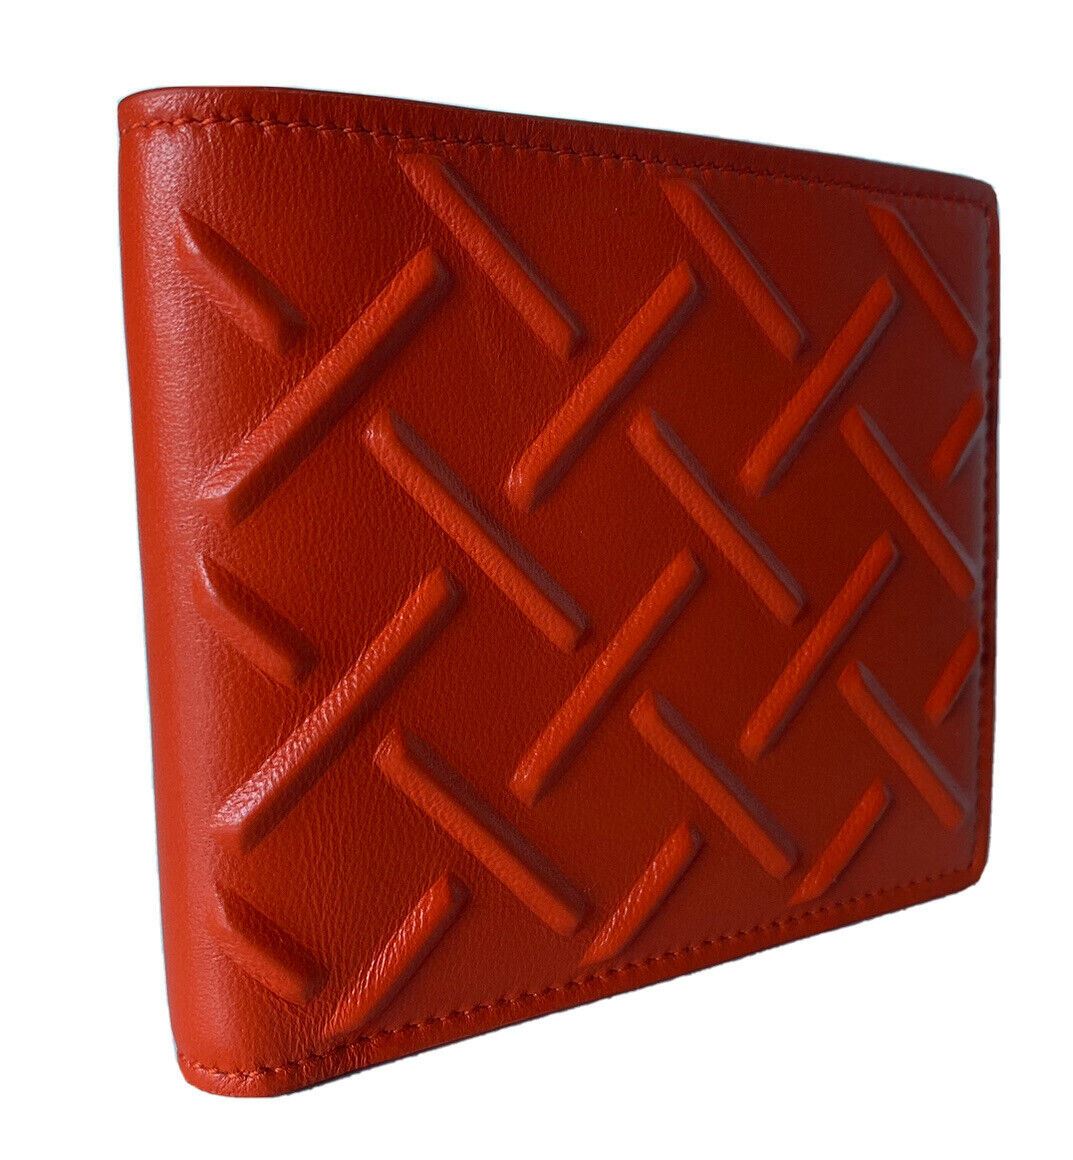 NWT $450 Bottega Veneta Nappa19 Graphic Bifold Leather Wallet Orange 605721 IT